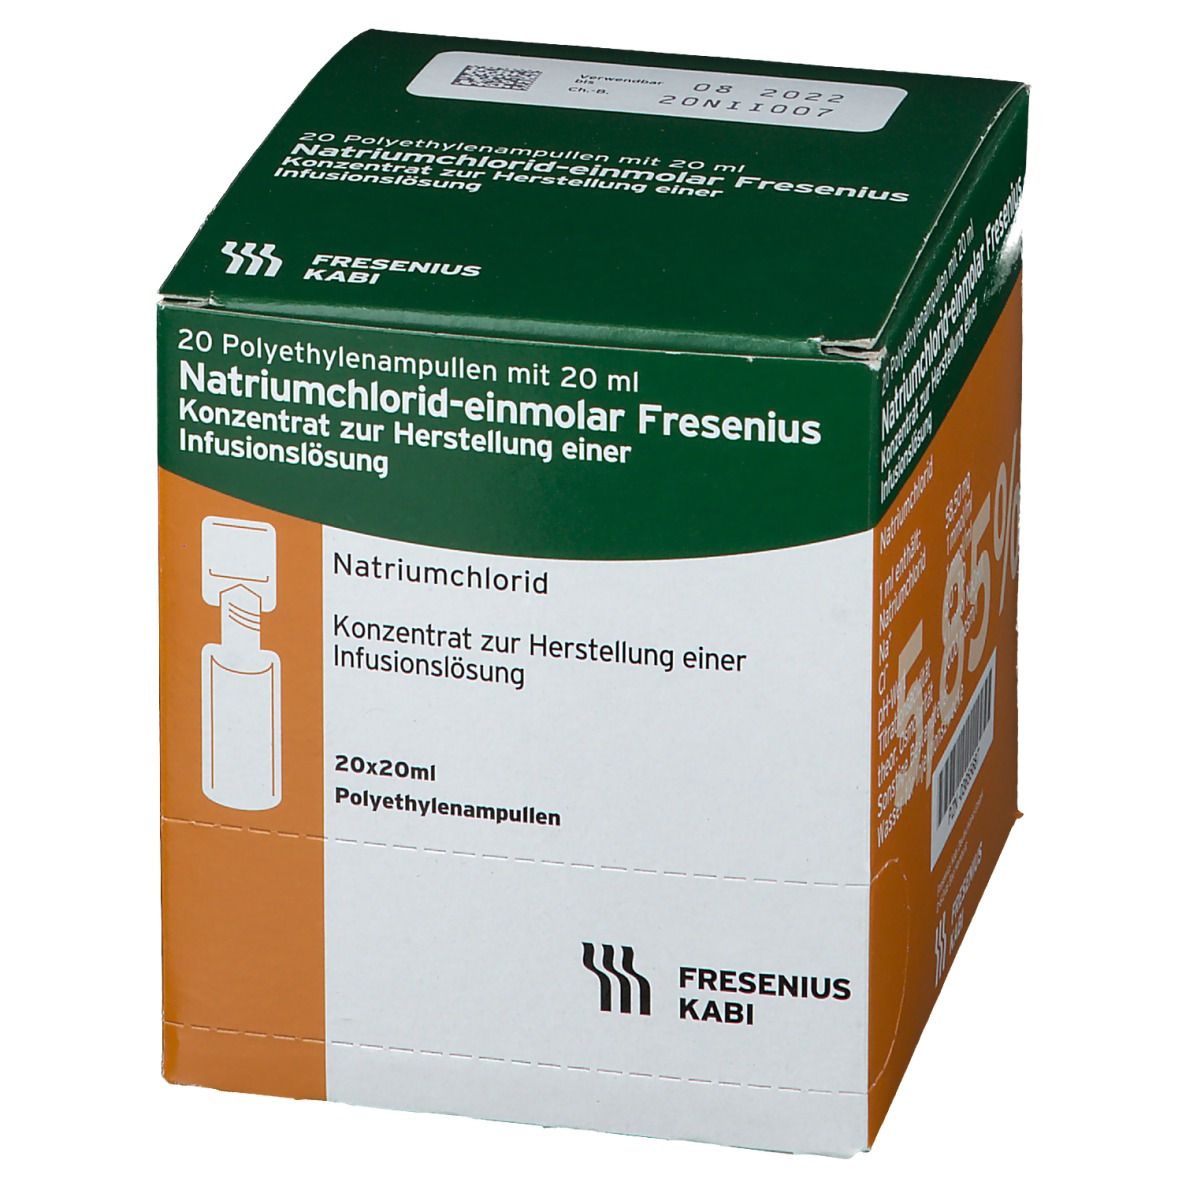 Natriumchlorid-einmolar Fresenius